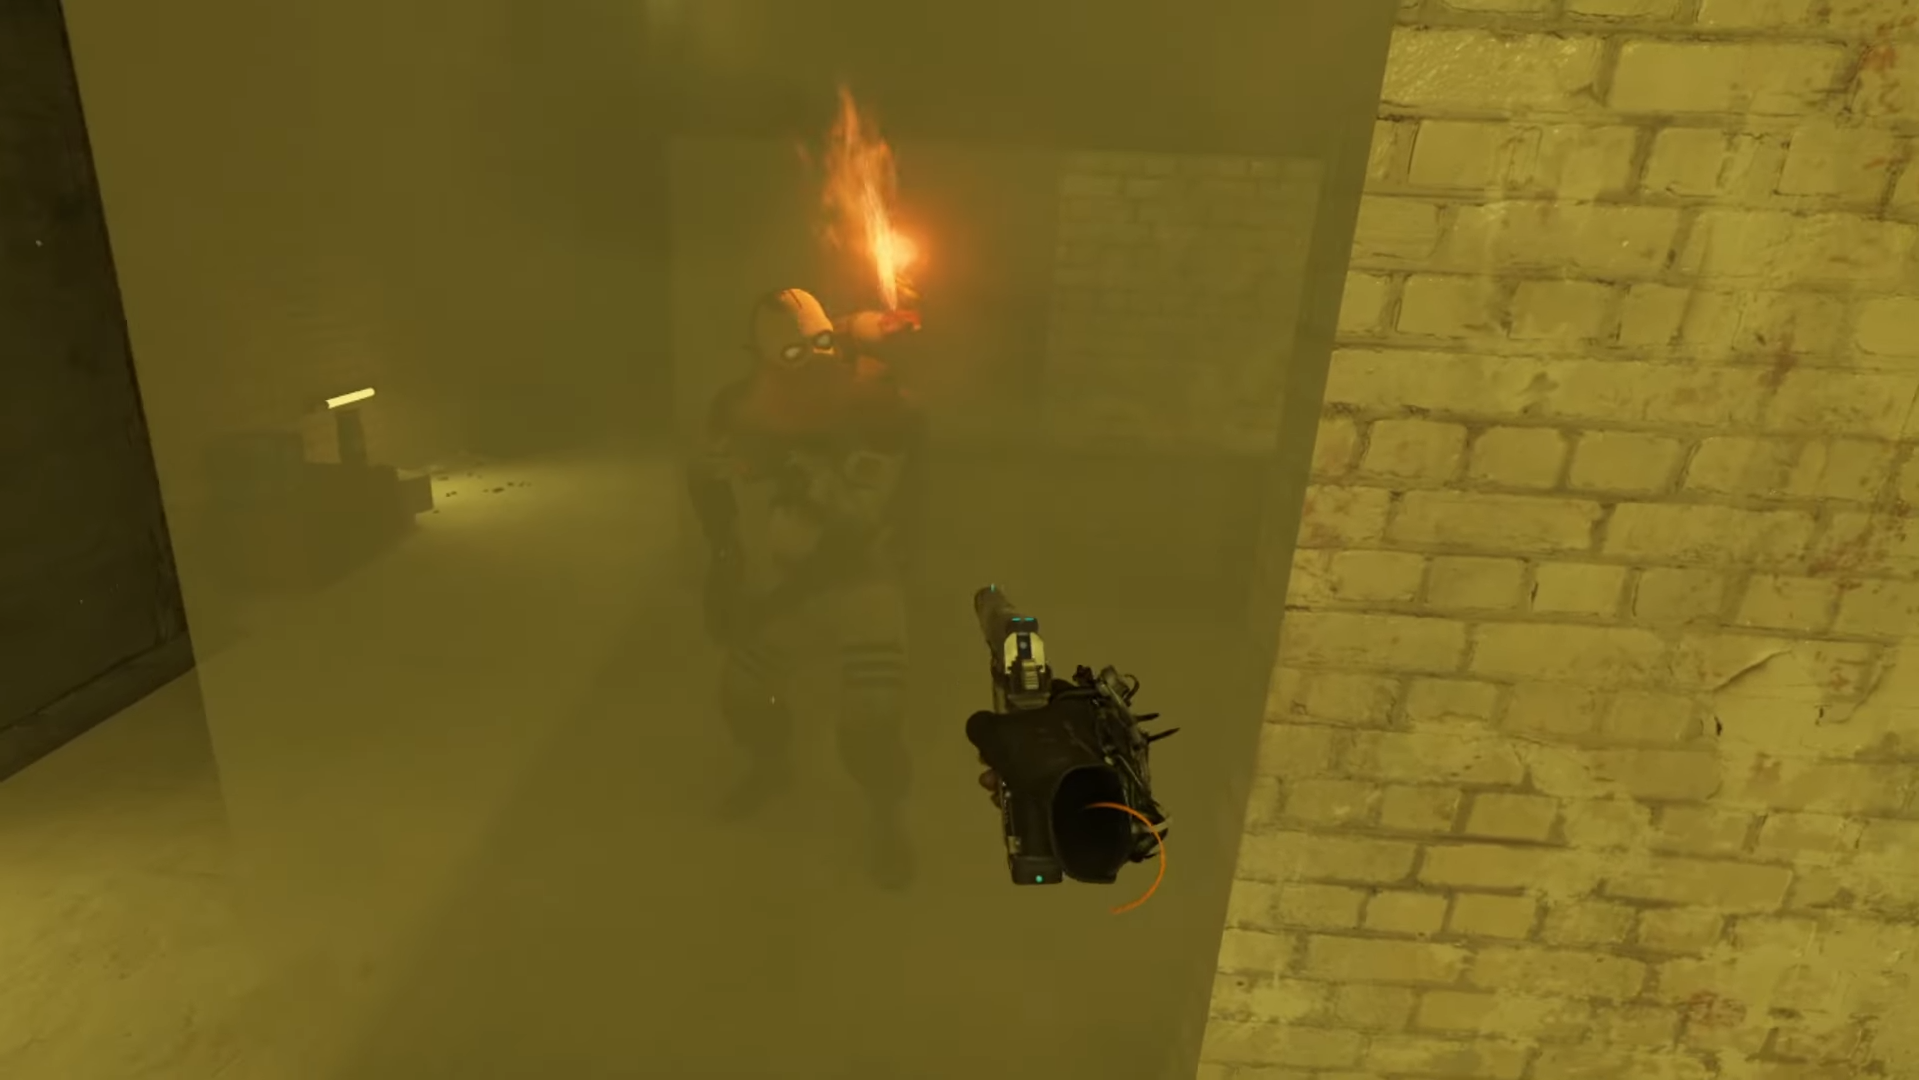 Half Life: Alyx - Bullet Penetration Mod lets you pierce walls and enemies